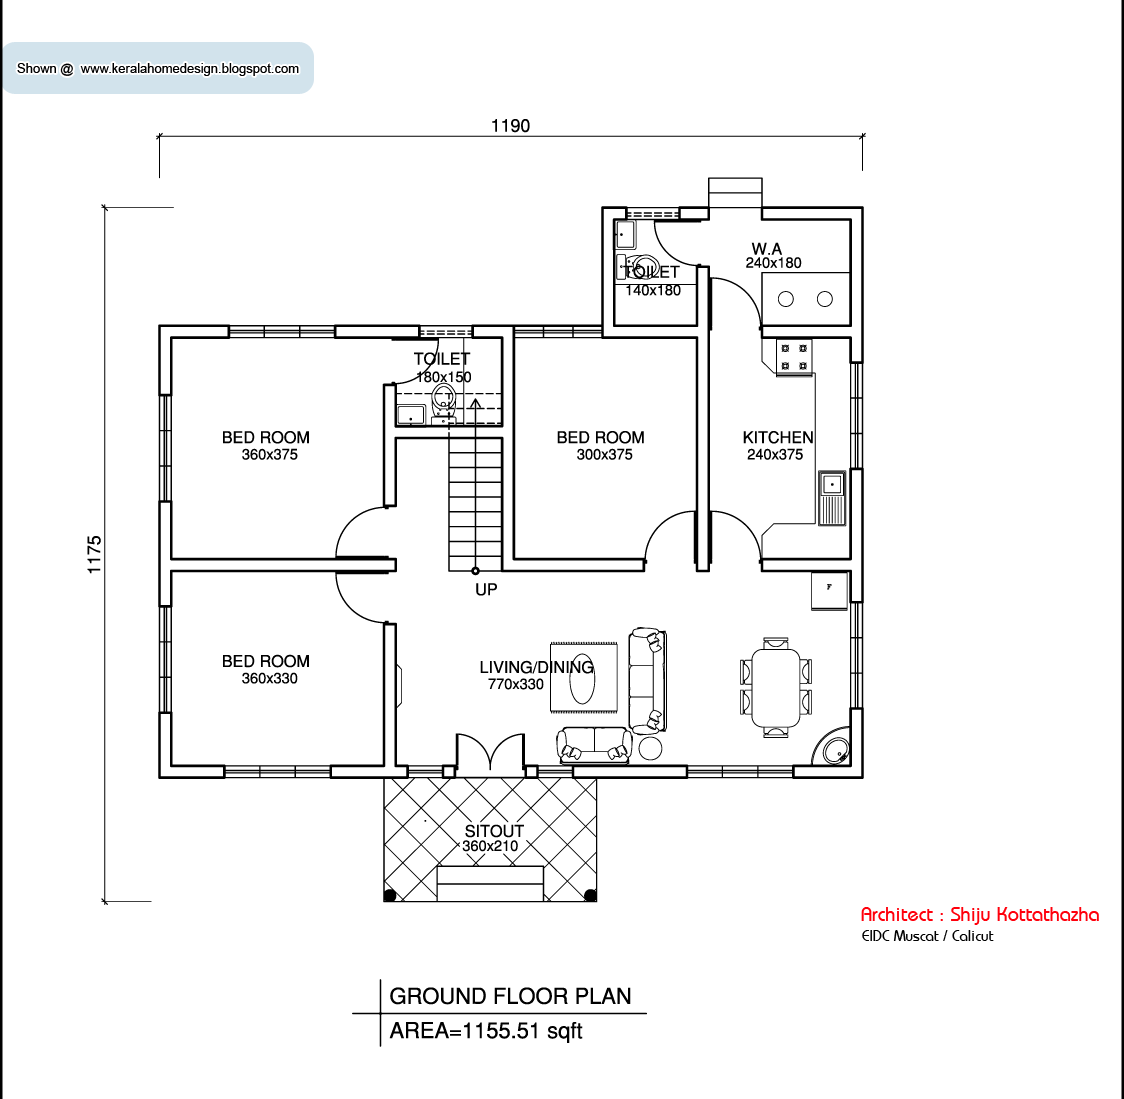 Home Design Plans